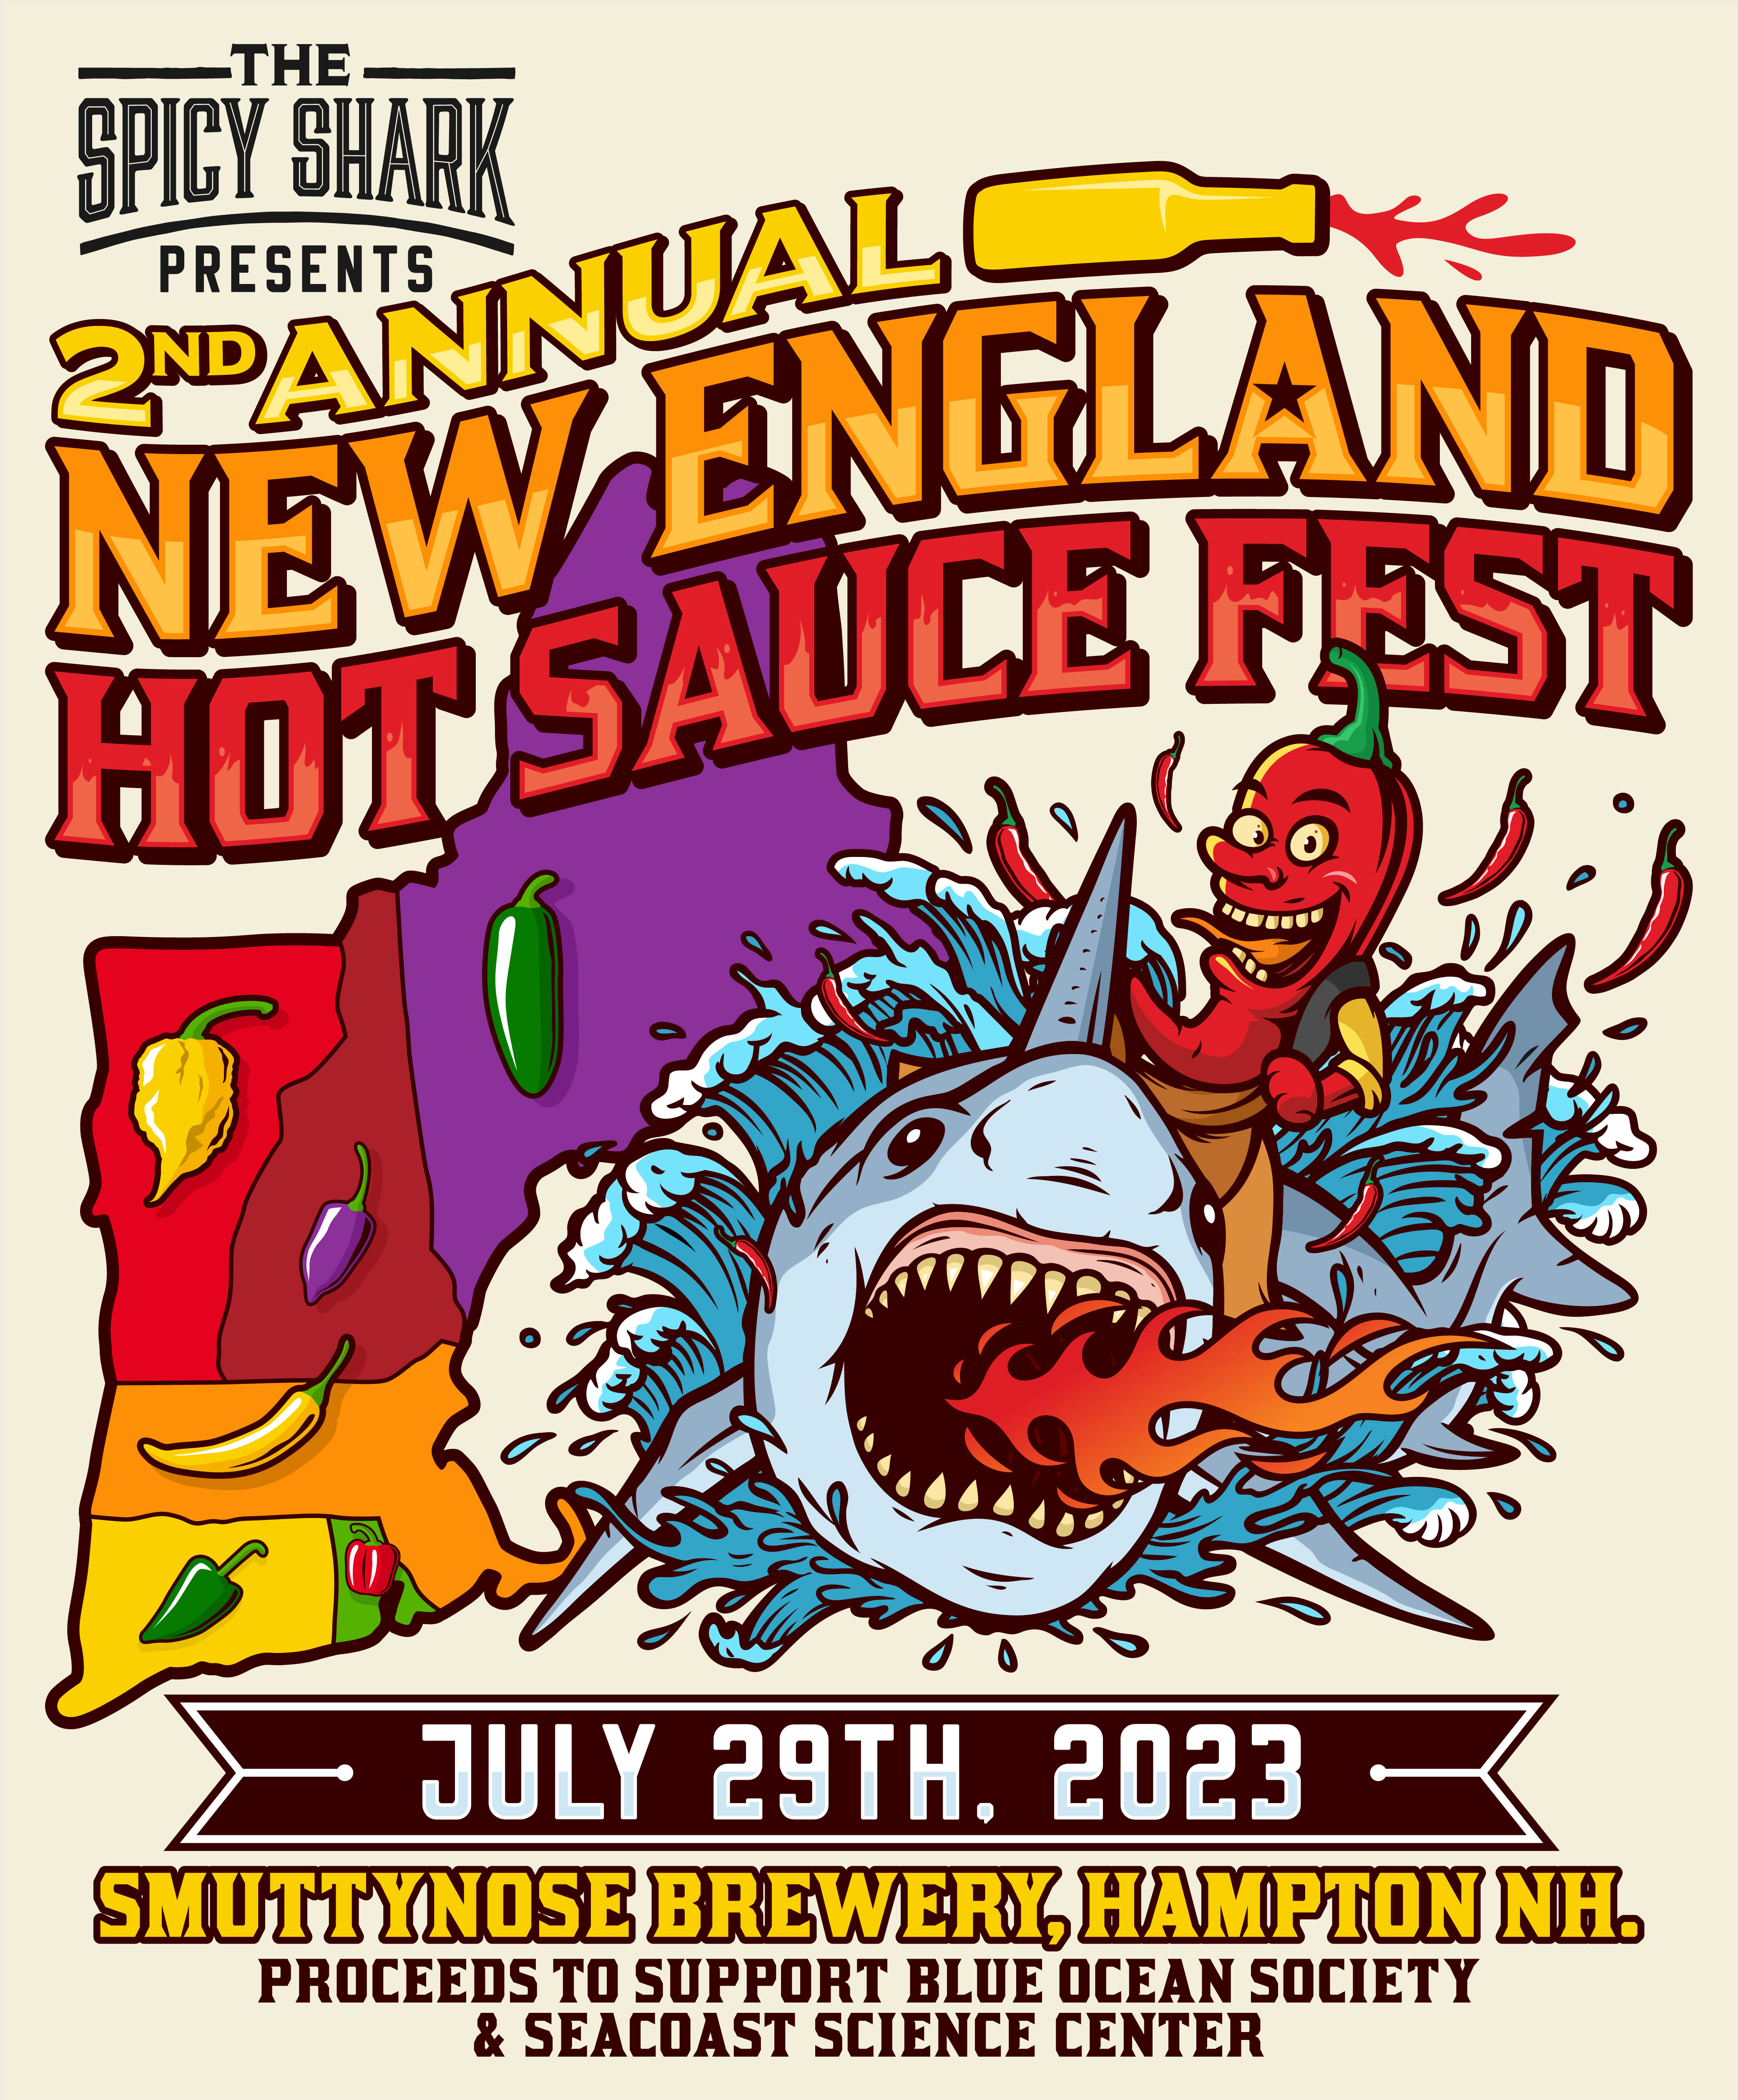 2 ND - New England Hot Sauce Fest  - Logo - Potrait (1)